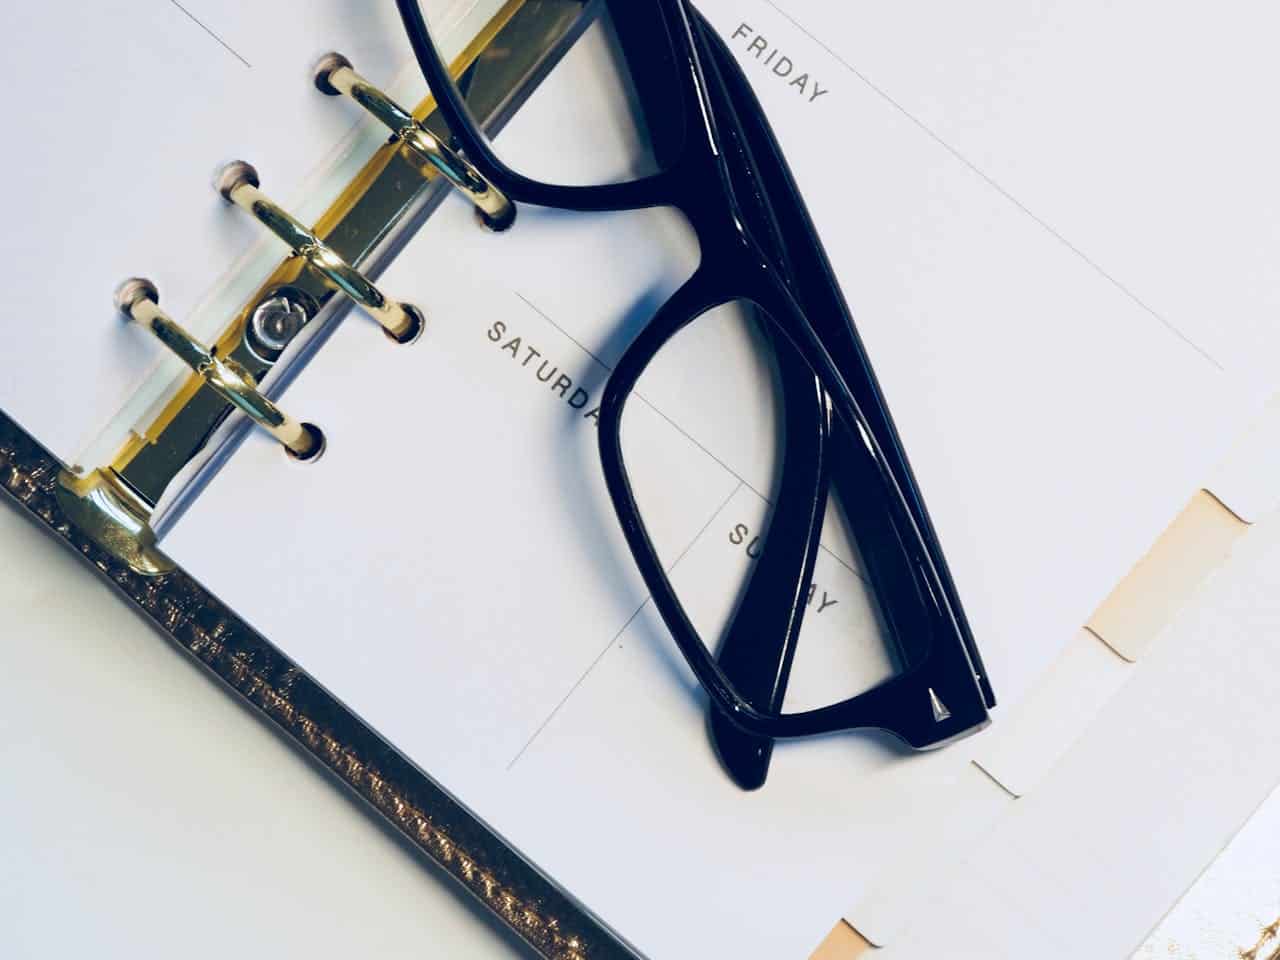 black framed glasses sitting on a calendar agenda book